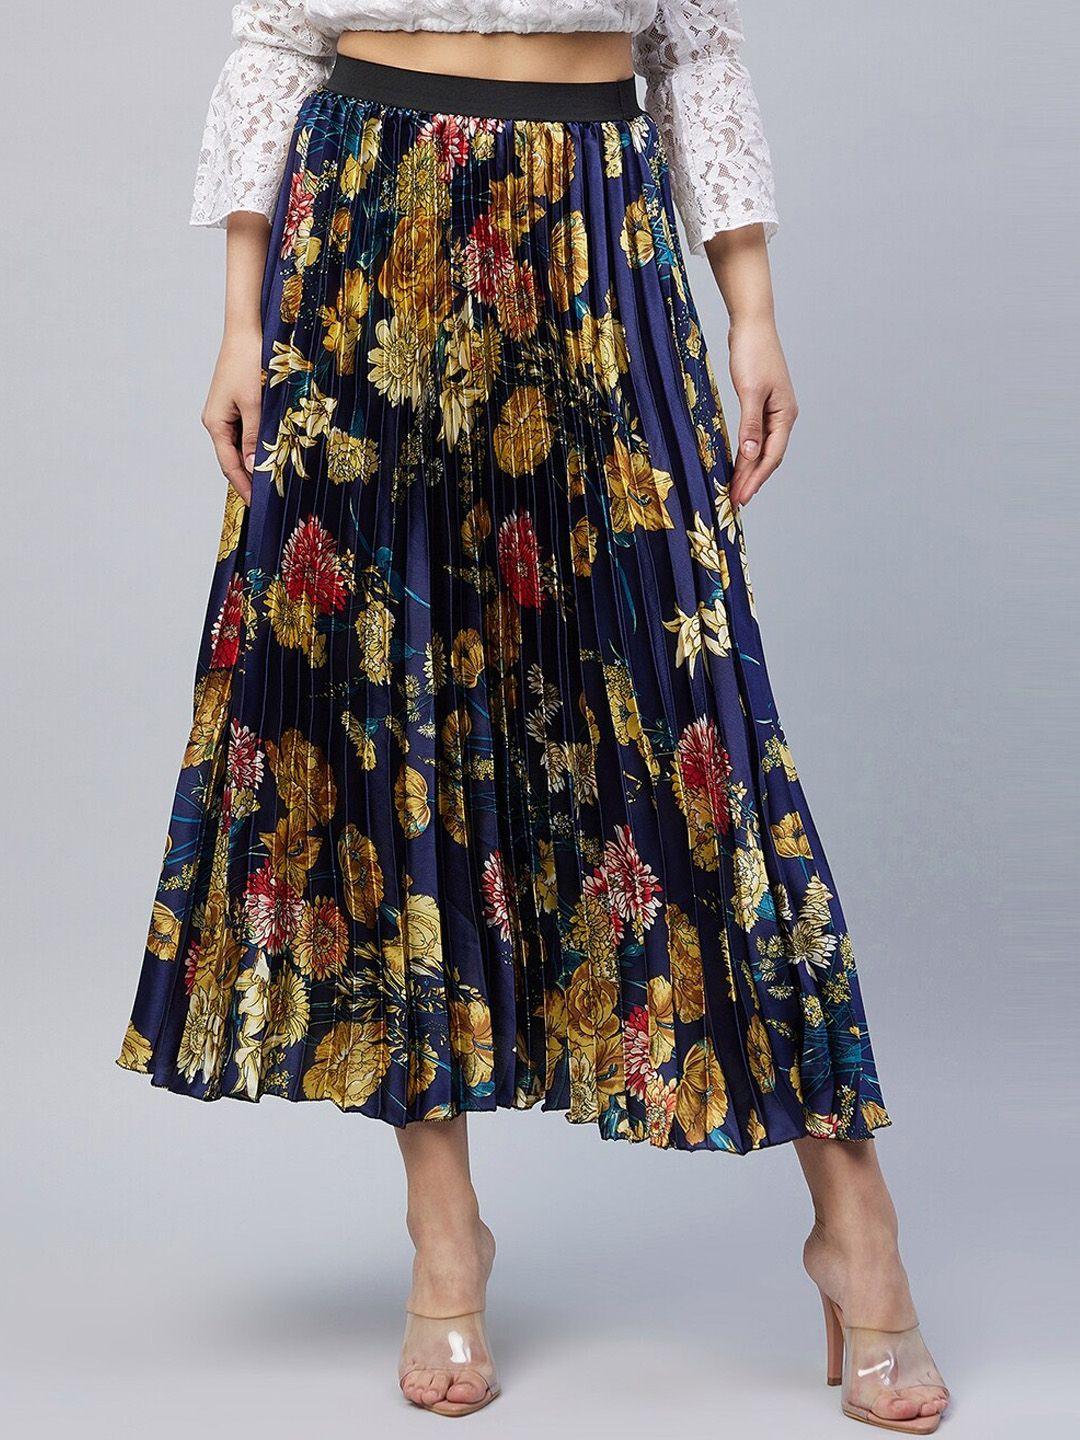 stylestone women blue & mustard-yellow printed flared maxi skirt